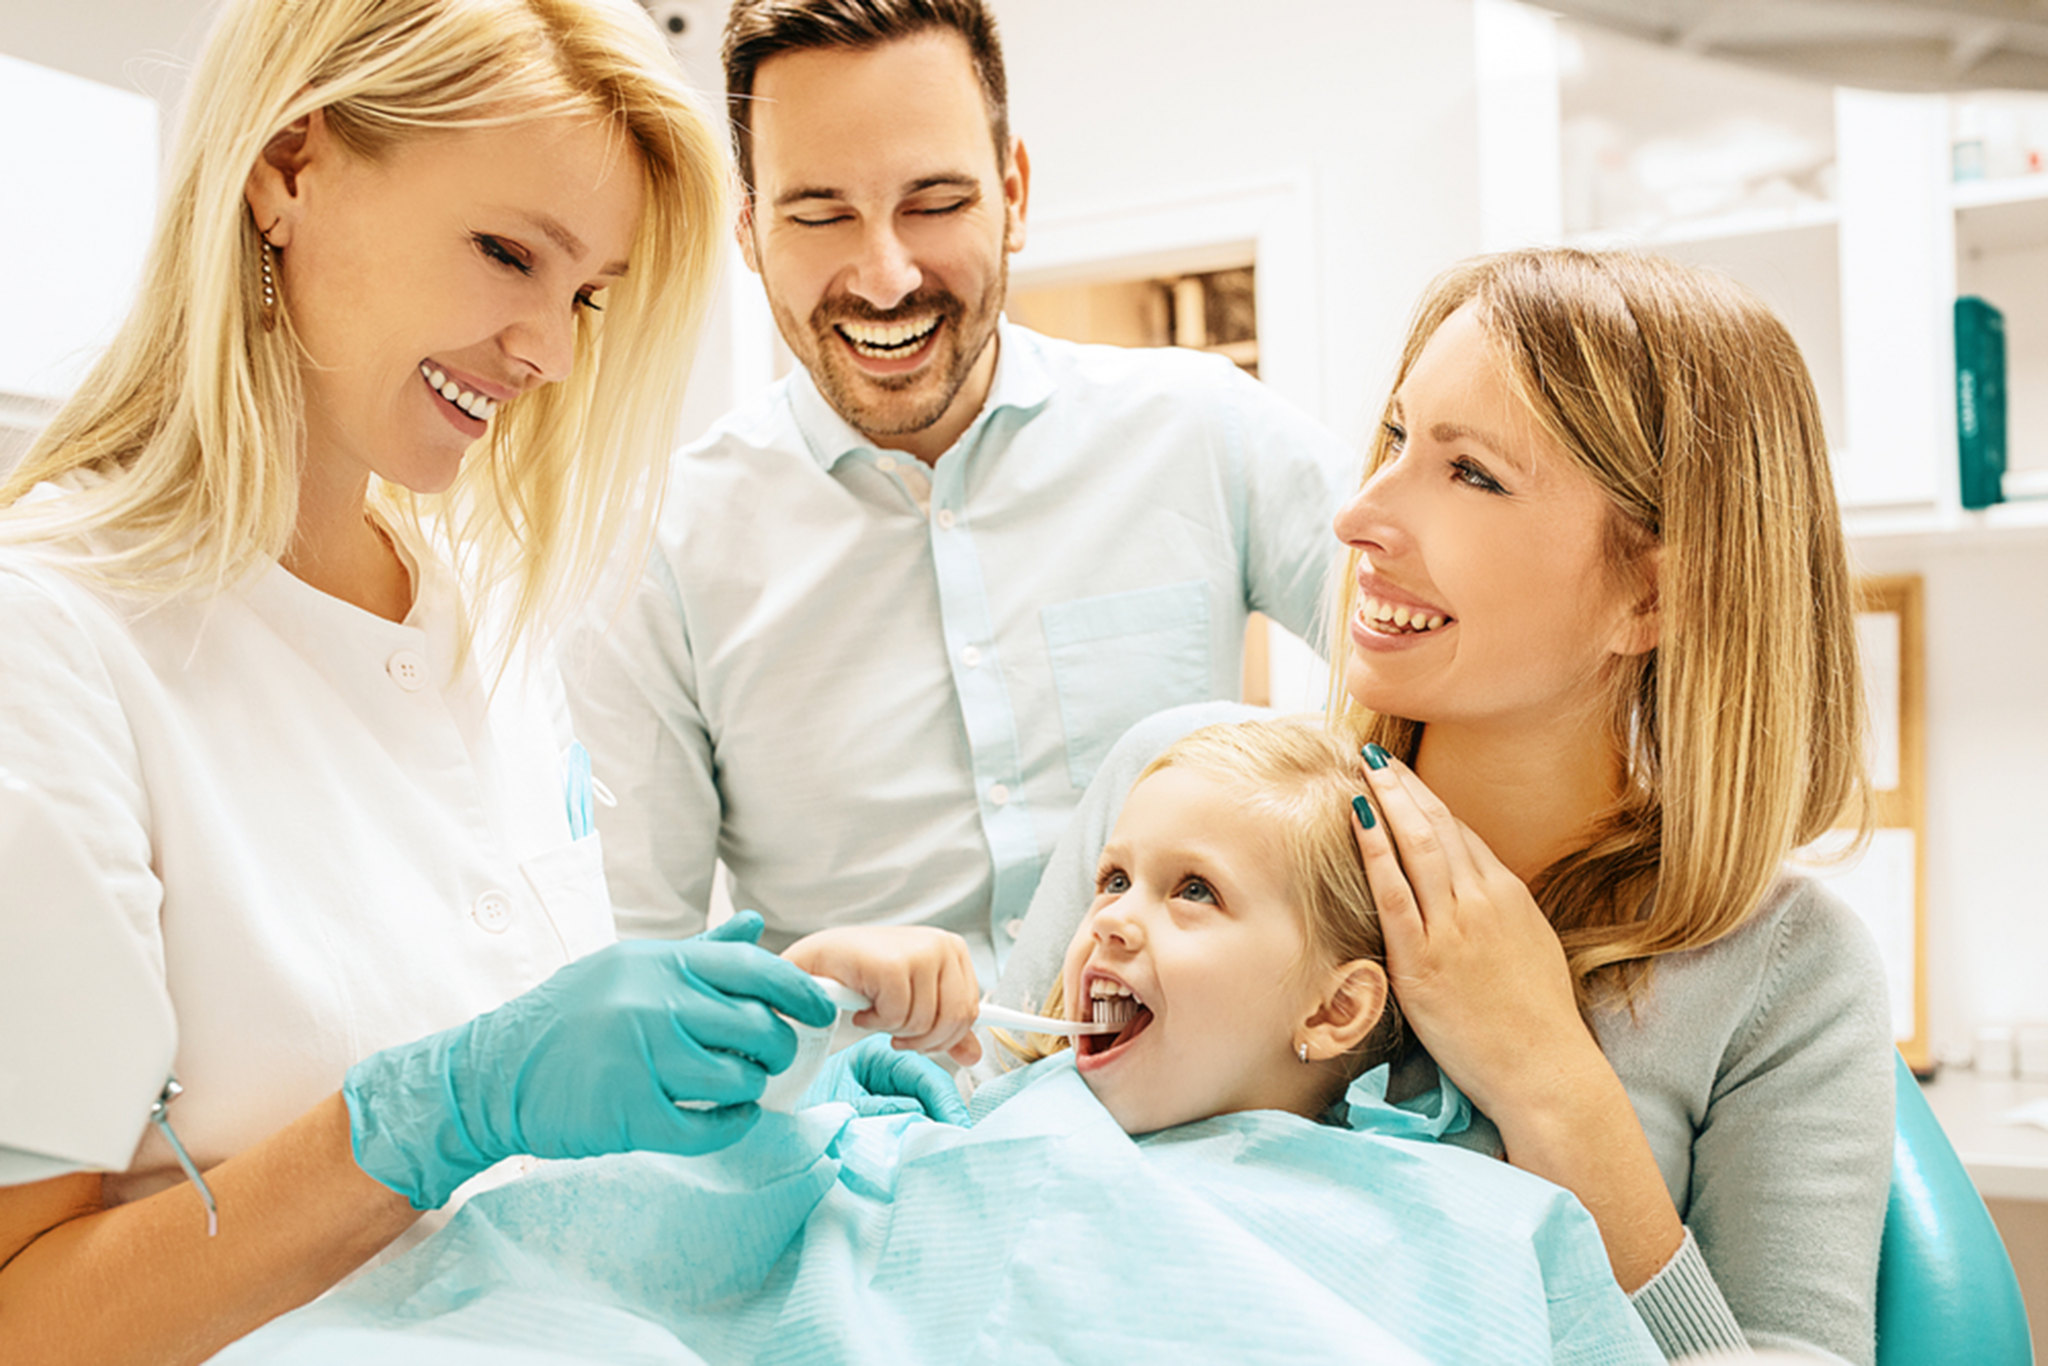 Polo Park Dental - The Benefits of Having a Family Dentist